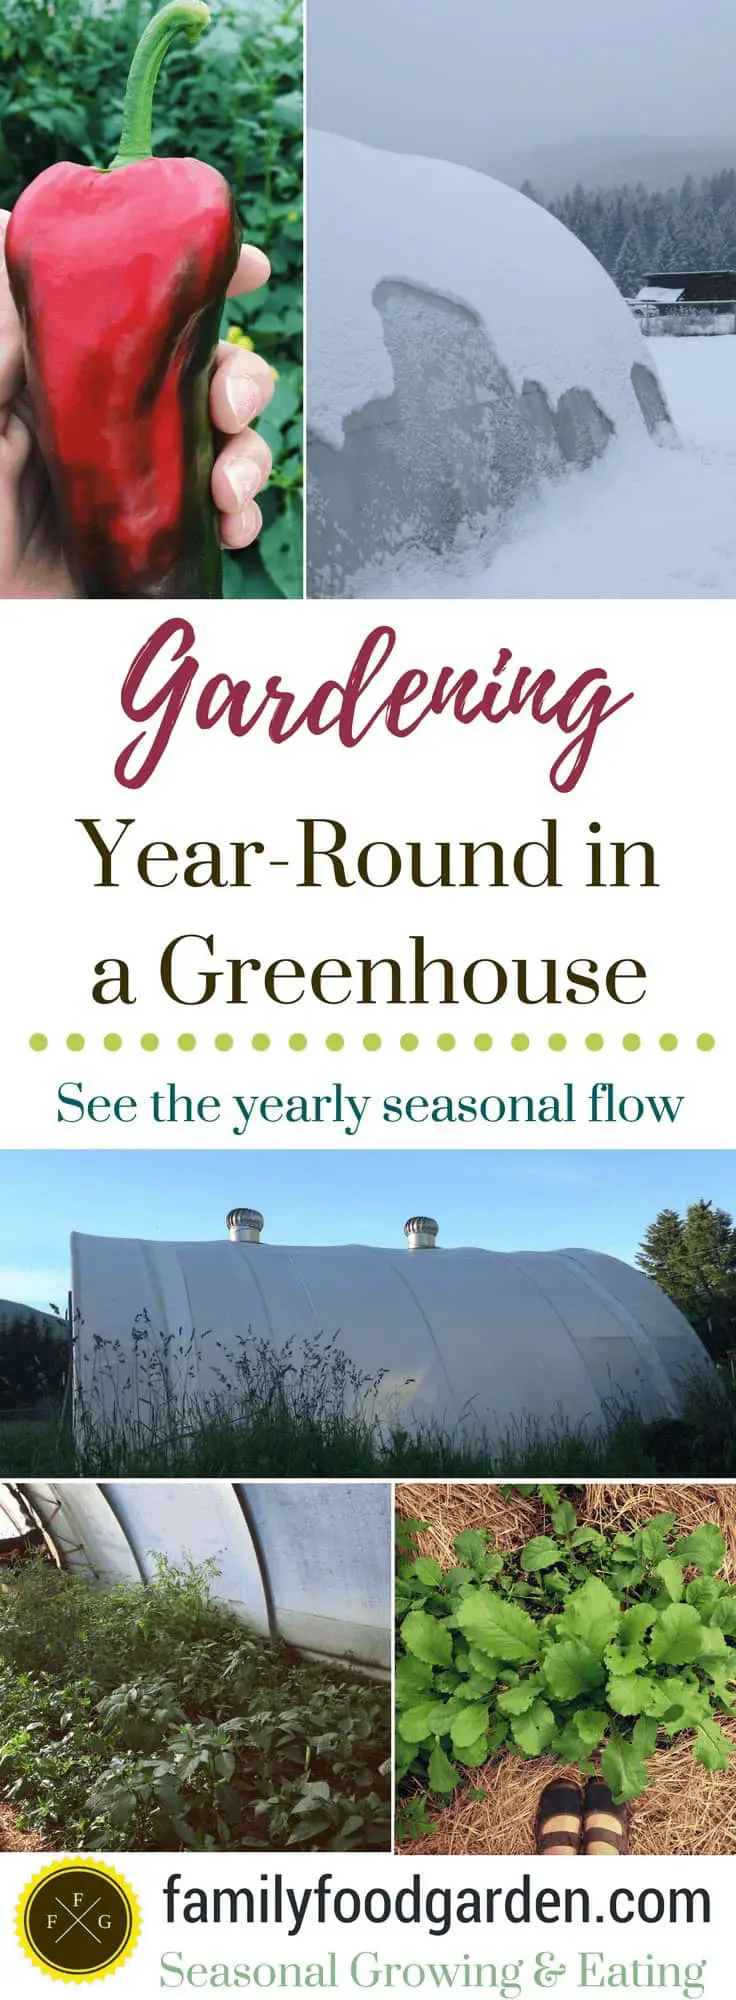 Greenhouse Gardening- Grow Vegetables Year-Round